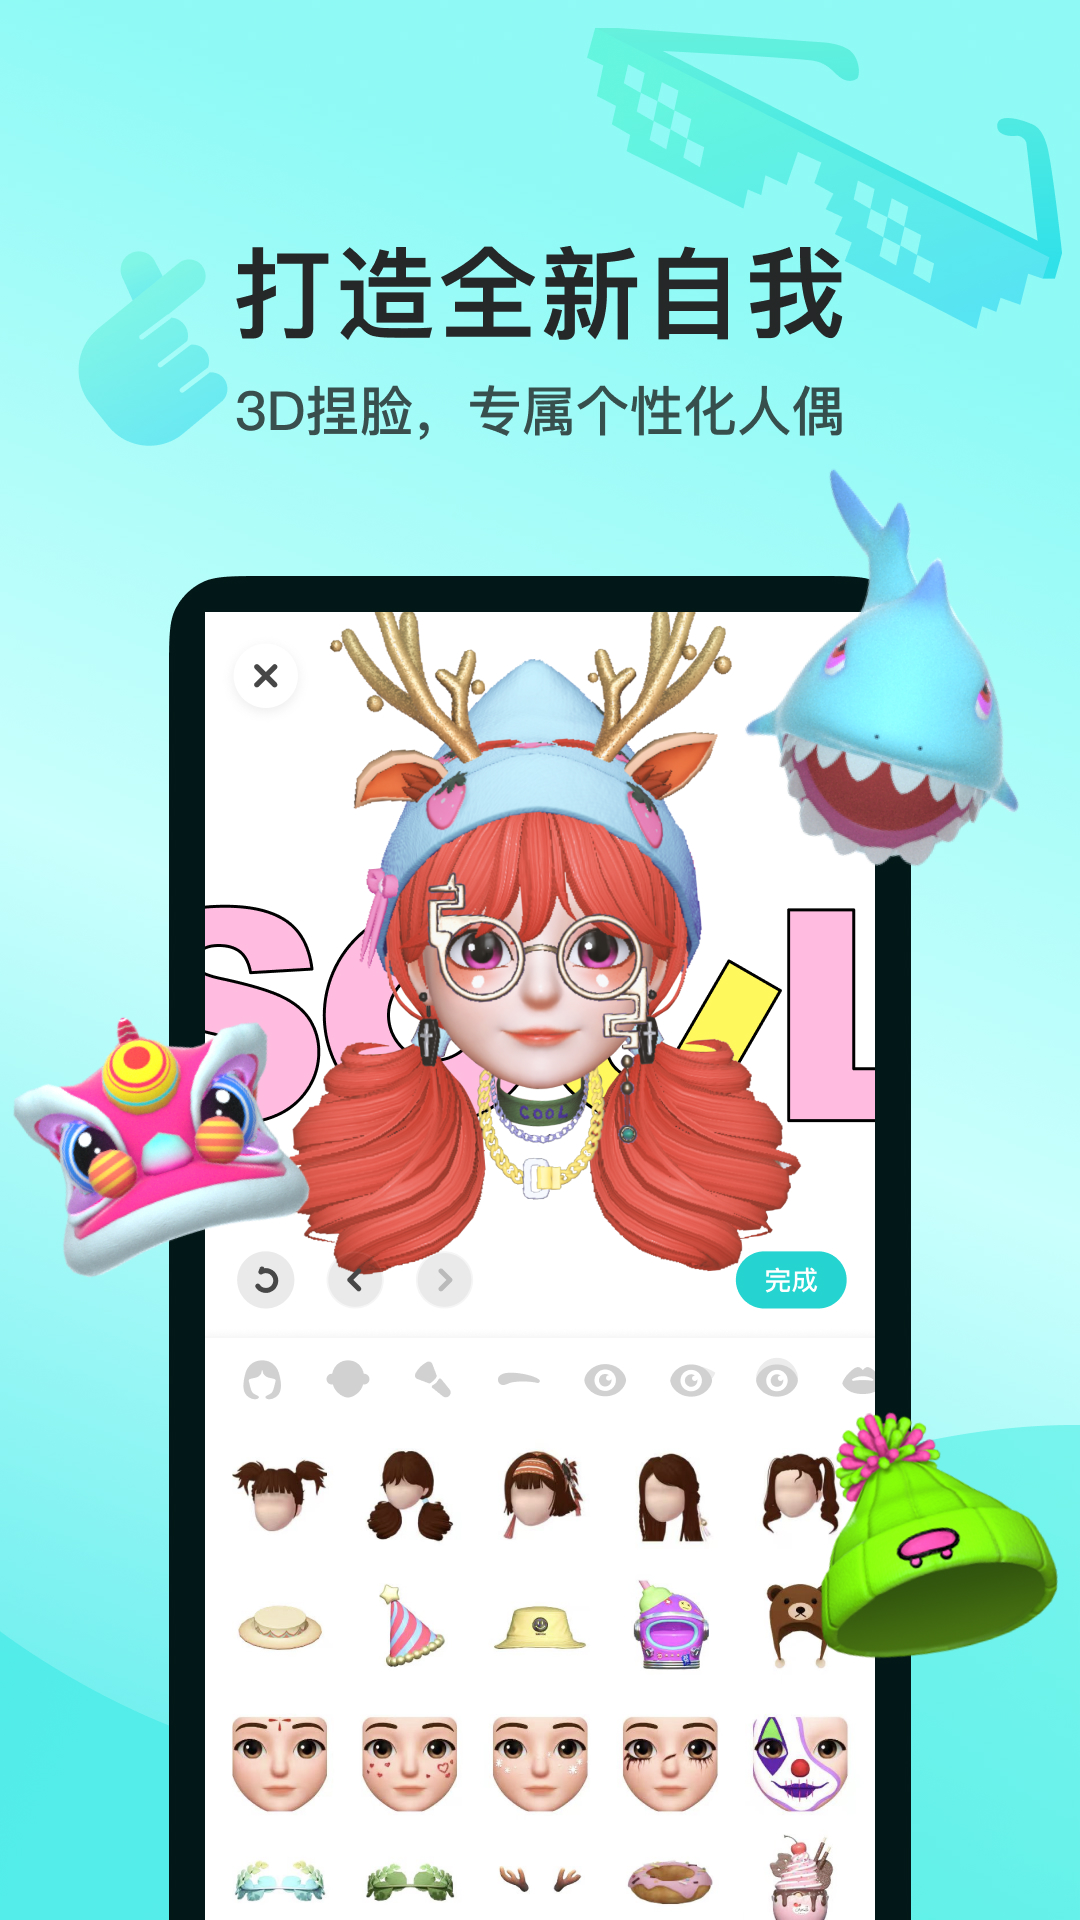 soul海外版app